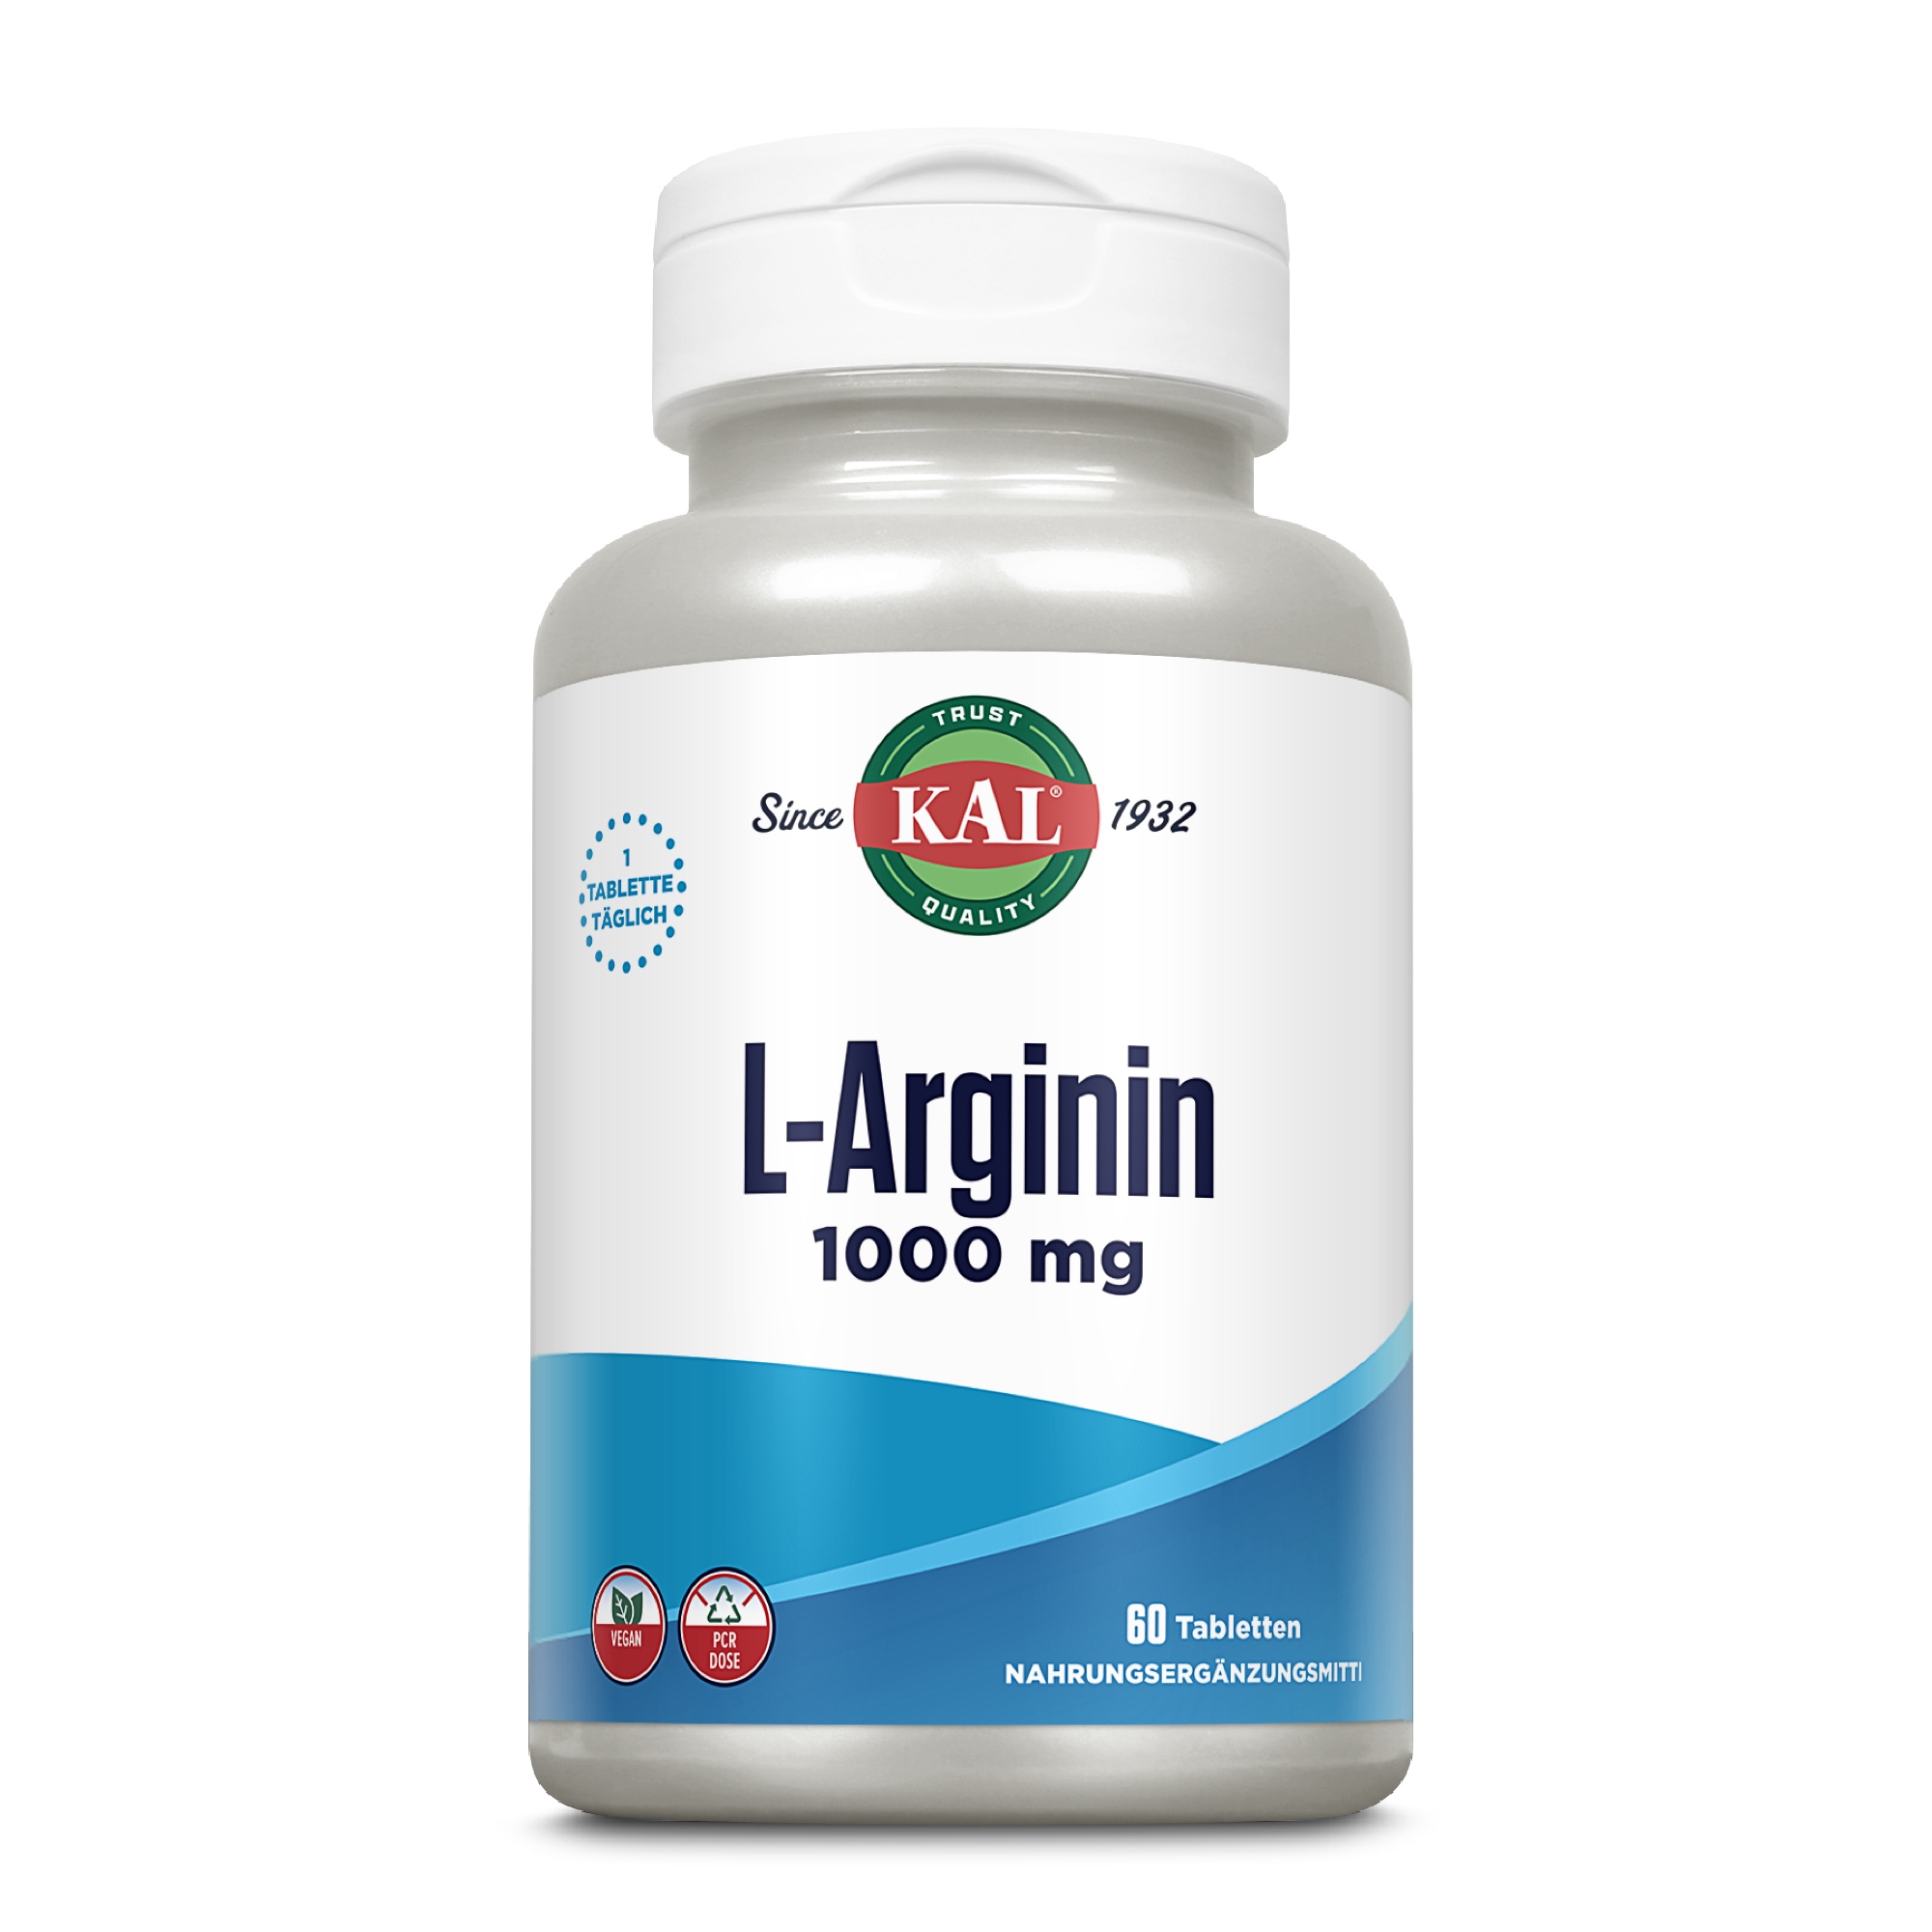 L-Arginin 1000 mg